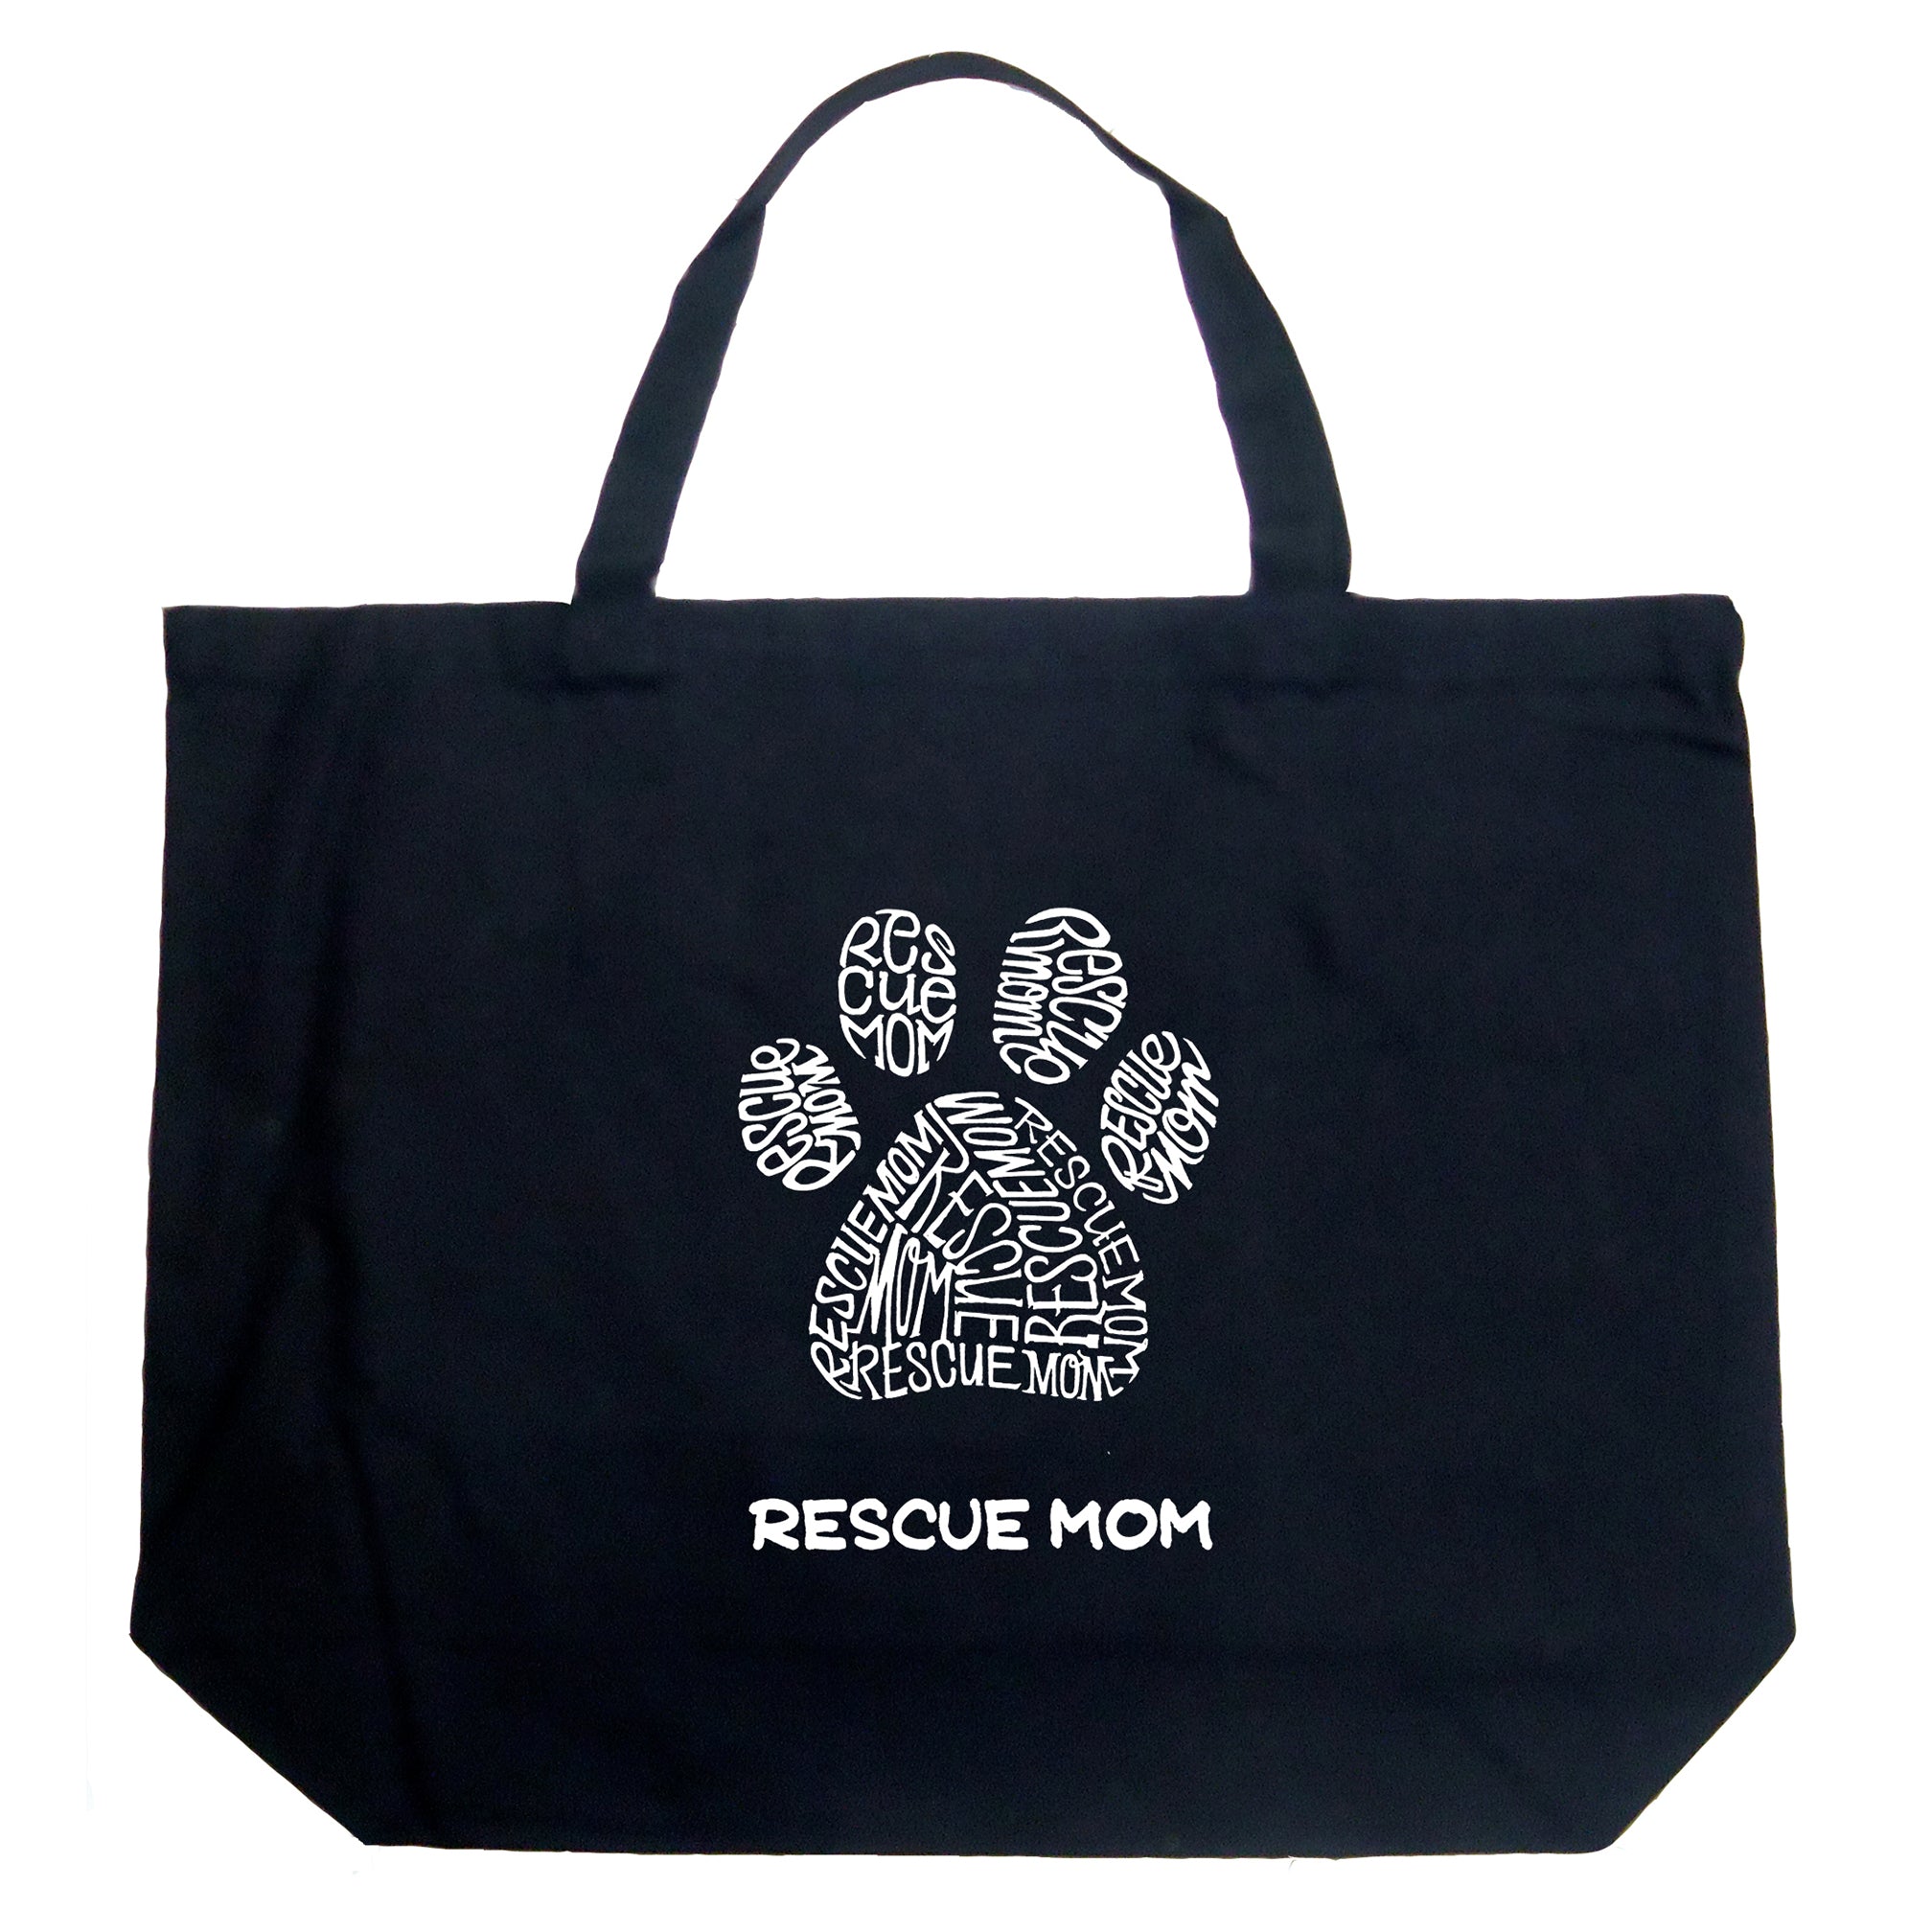 Rescue Mom - Large Word Art Tote Bag - Large - Black